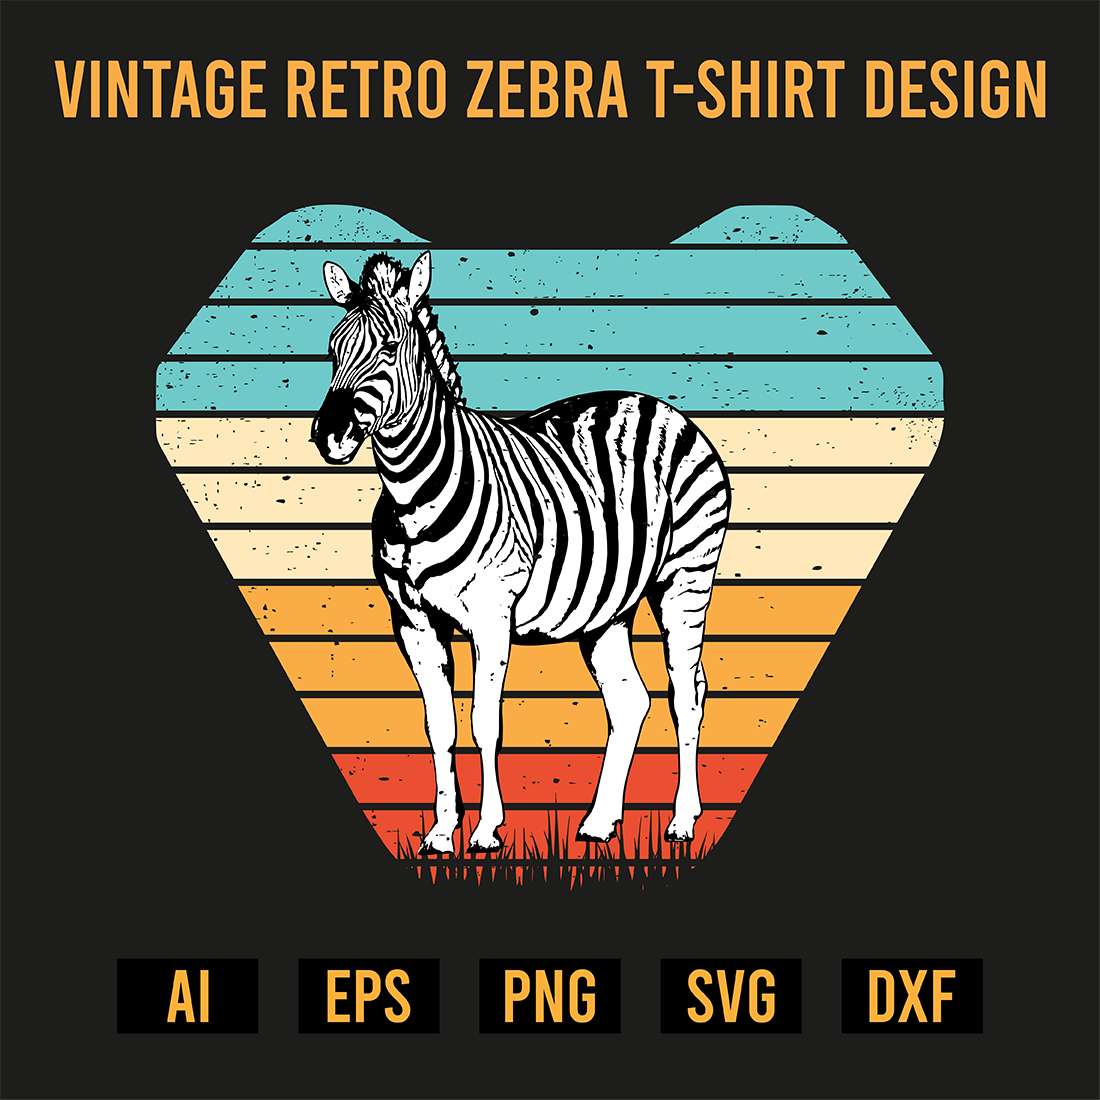 Vintage Retro Zebra T-Shirt Design preview image.